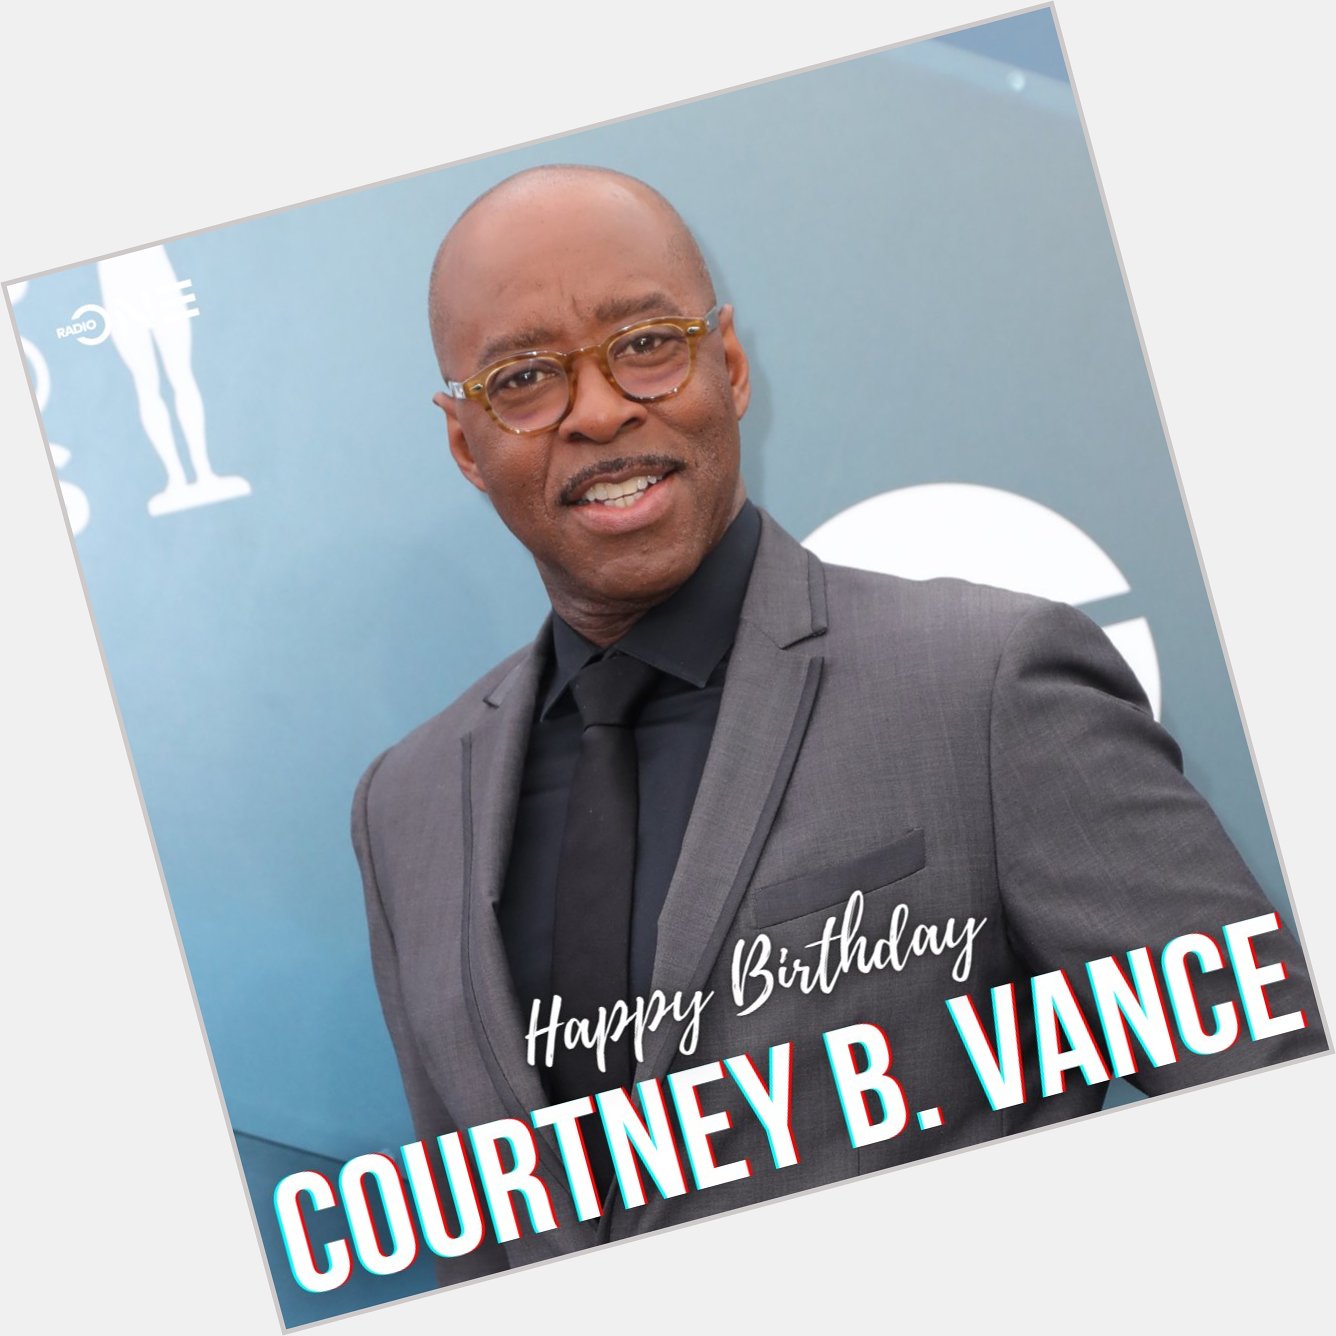 Happy birthday to actor Courtney B. Vance! He turns 61 today.  